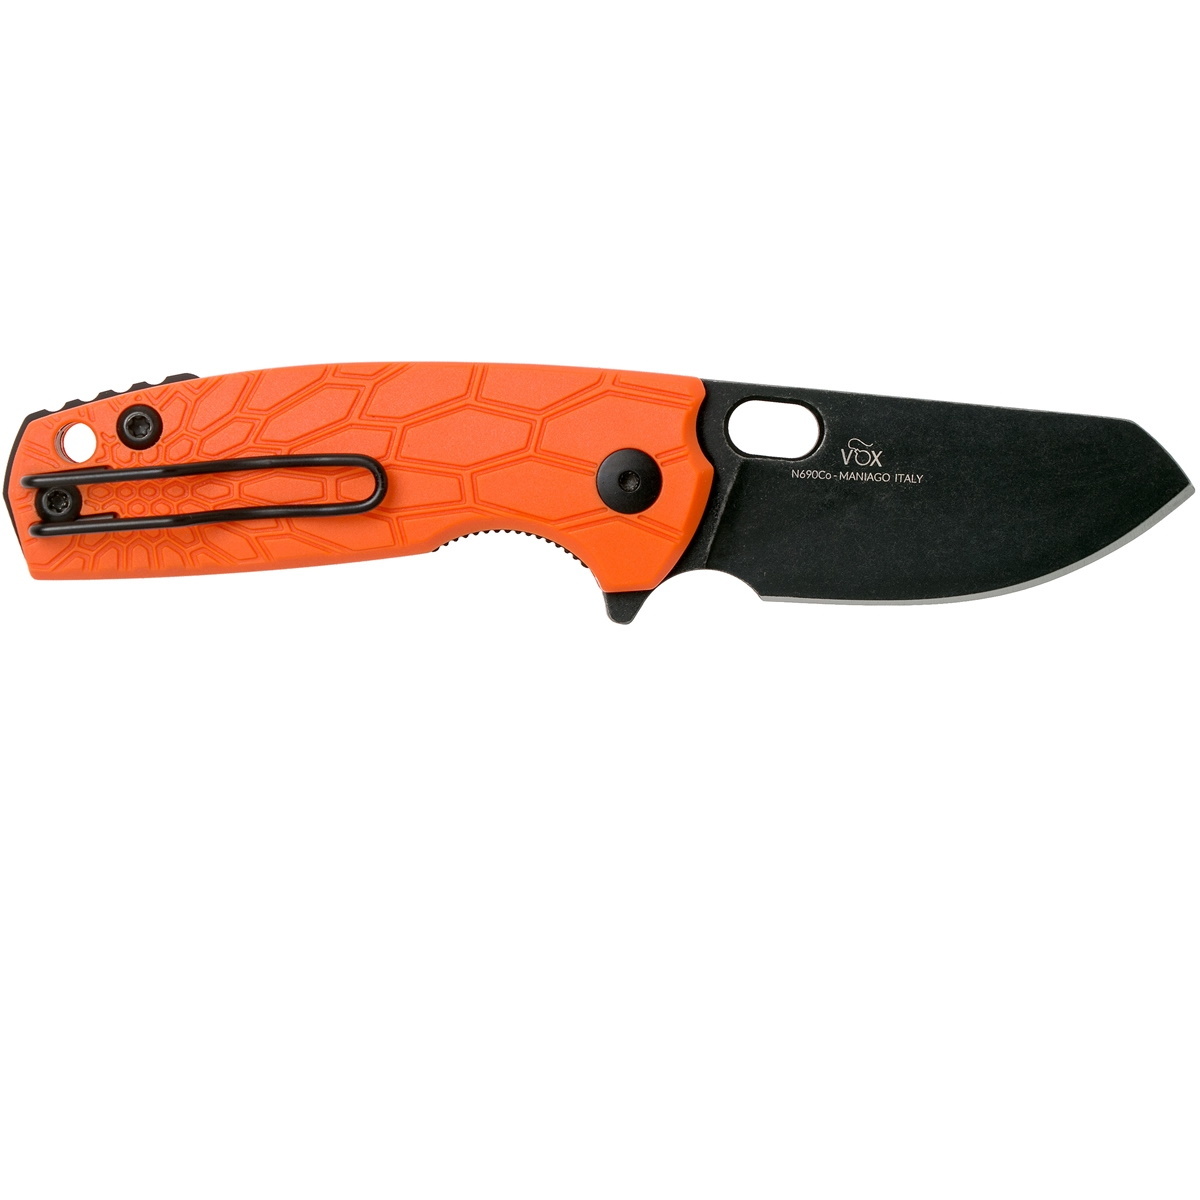 Складной нож Fox Baby Core, сталь N690, рукоять пластик FRN оранжевый - фото 3